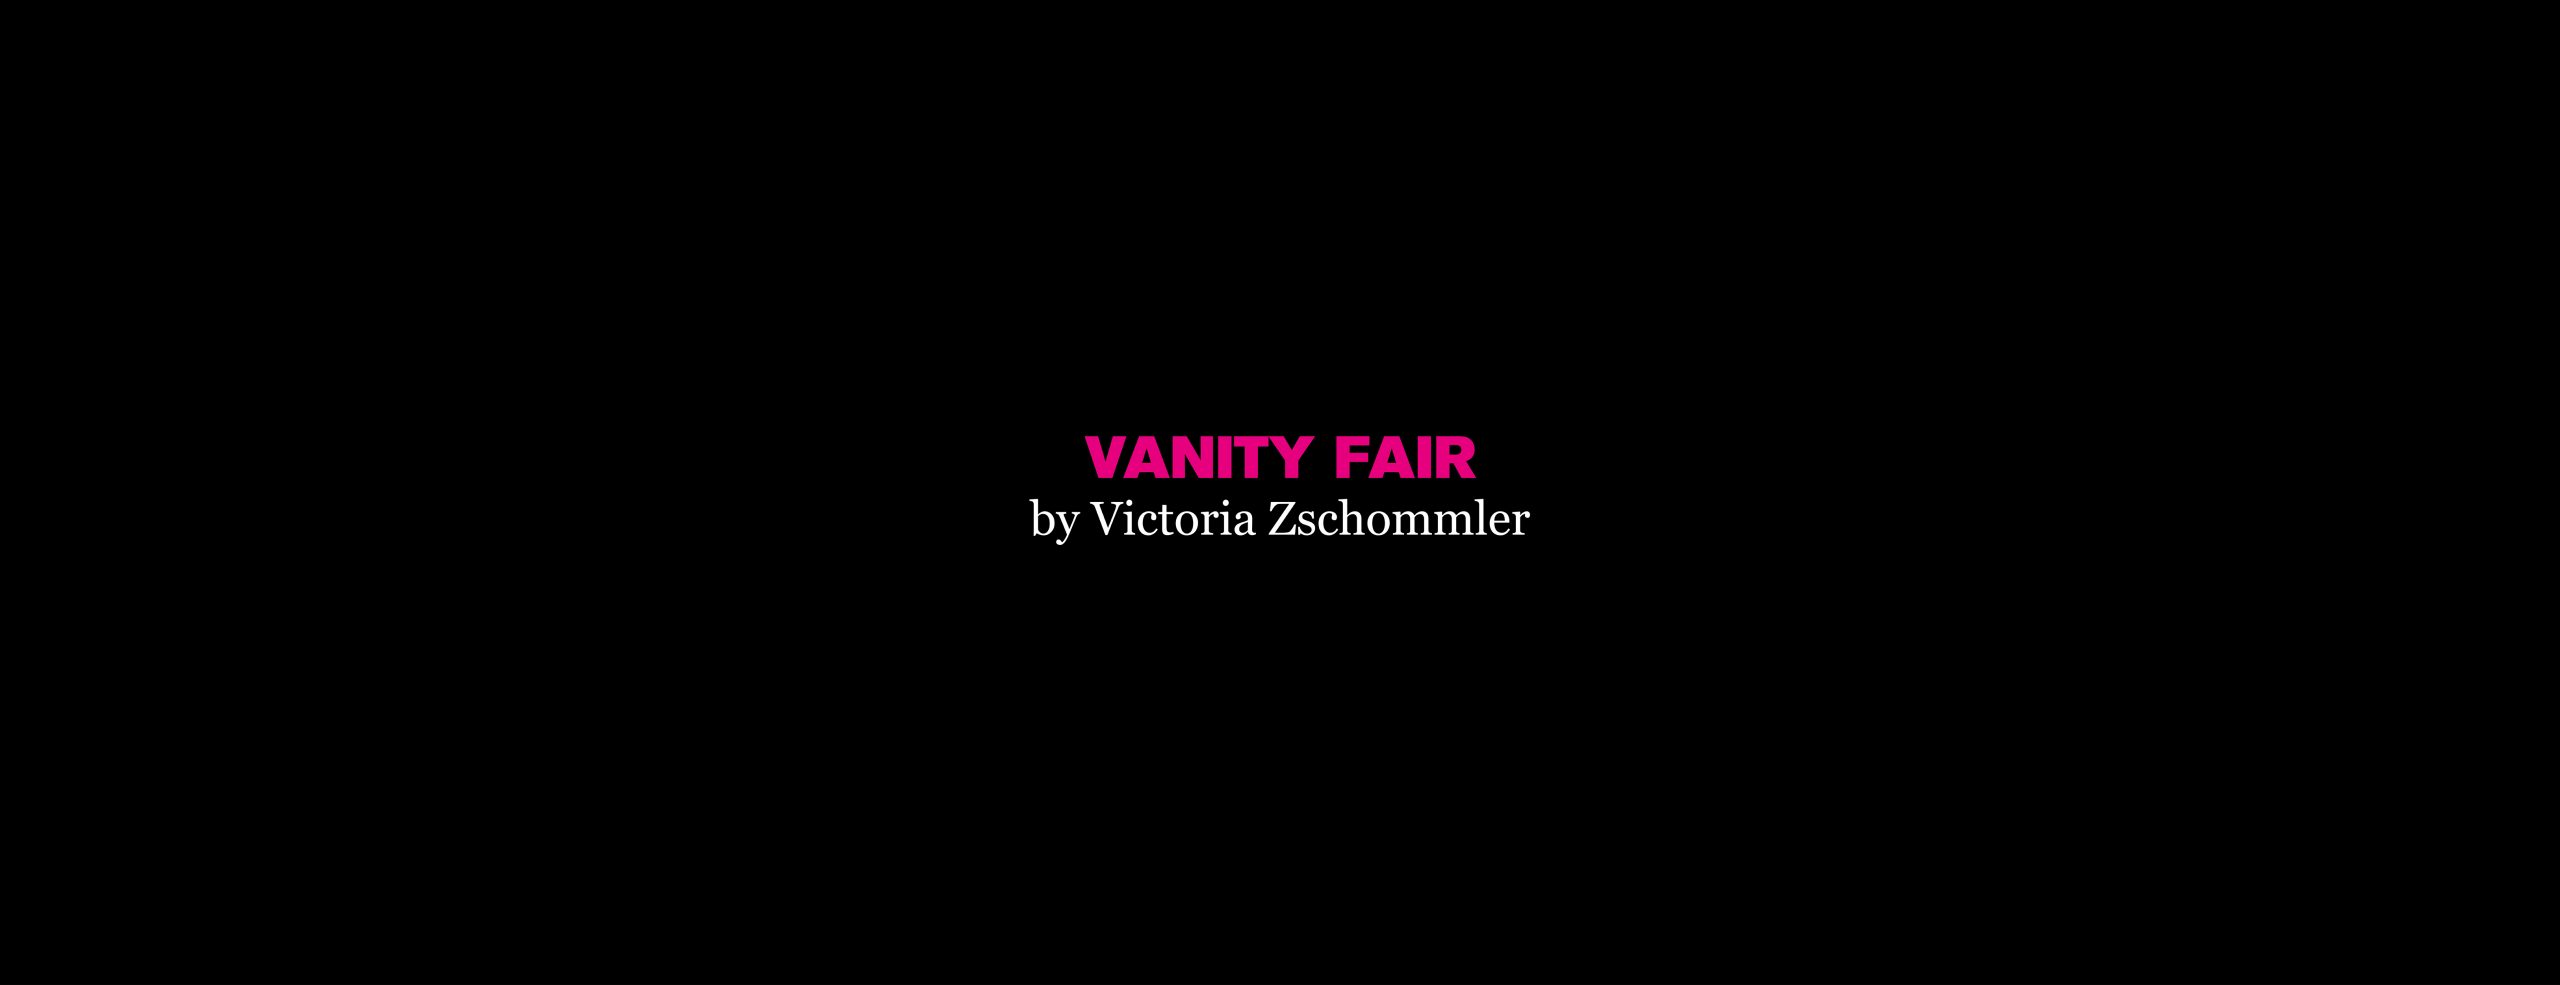 Vanity Fair by Victoria Zschommler